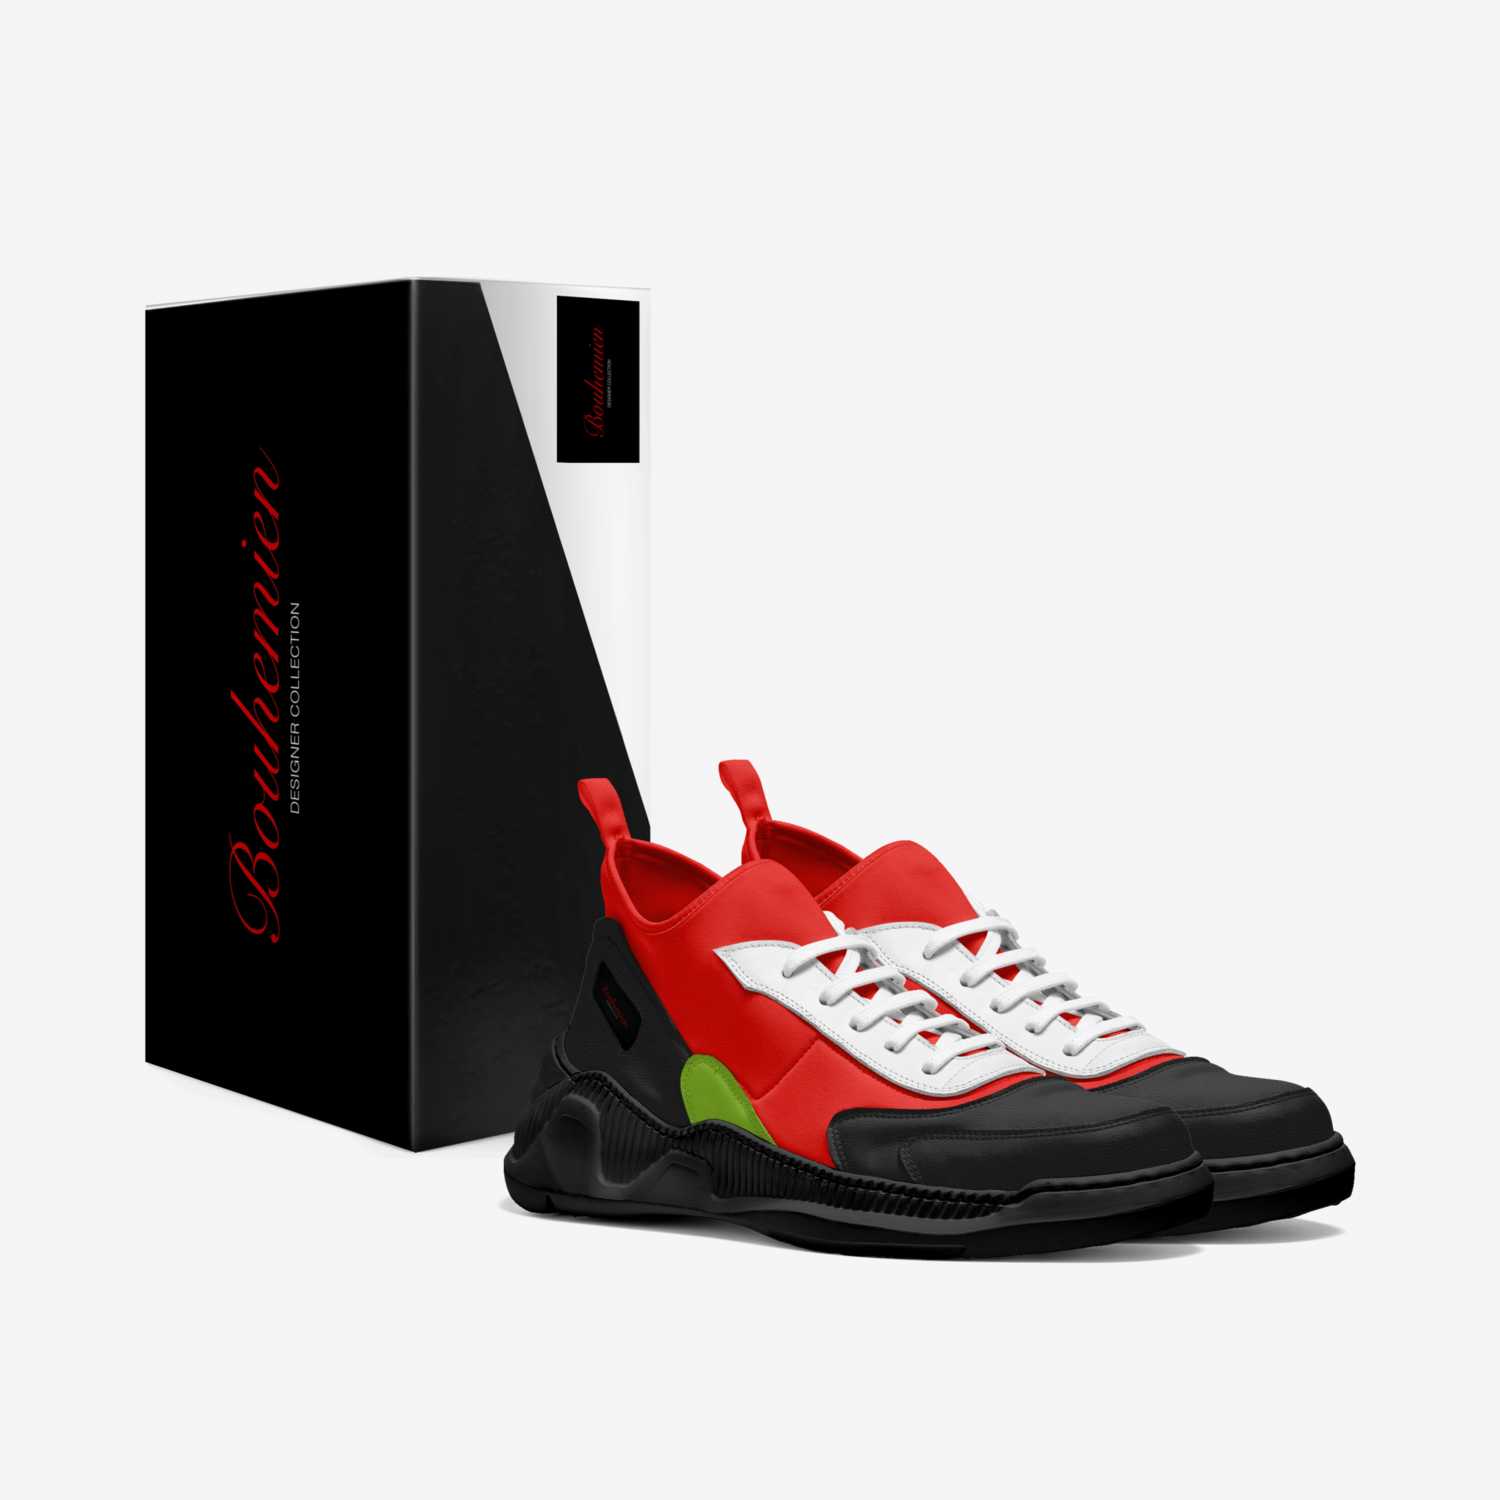 Bouhemien custom made in Italy shoes by Lewy Bluestrips | Box view